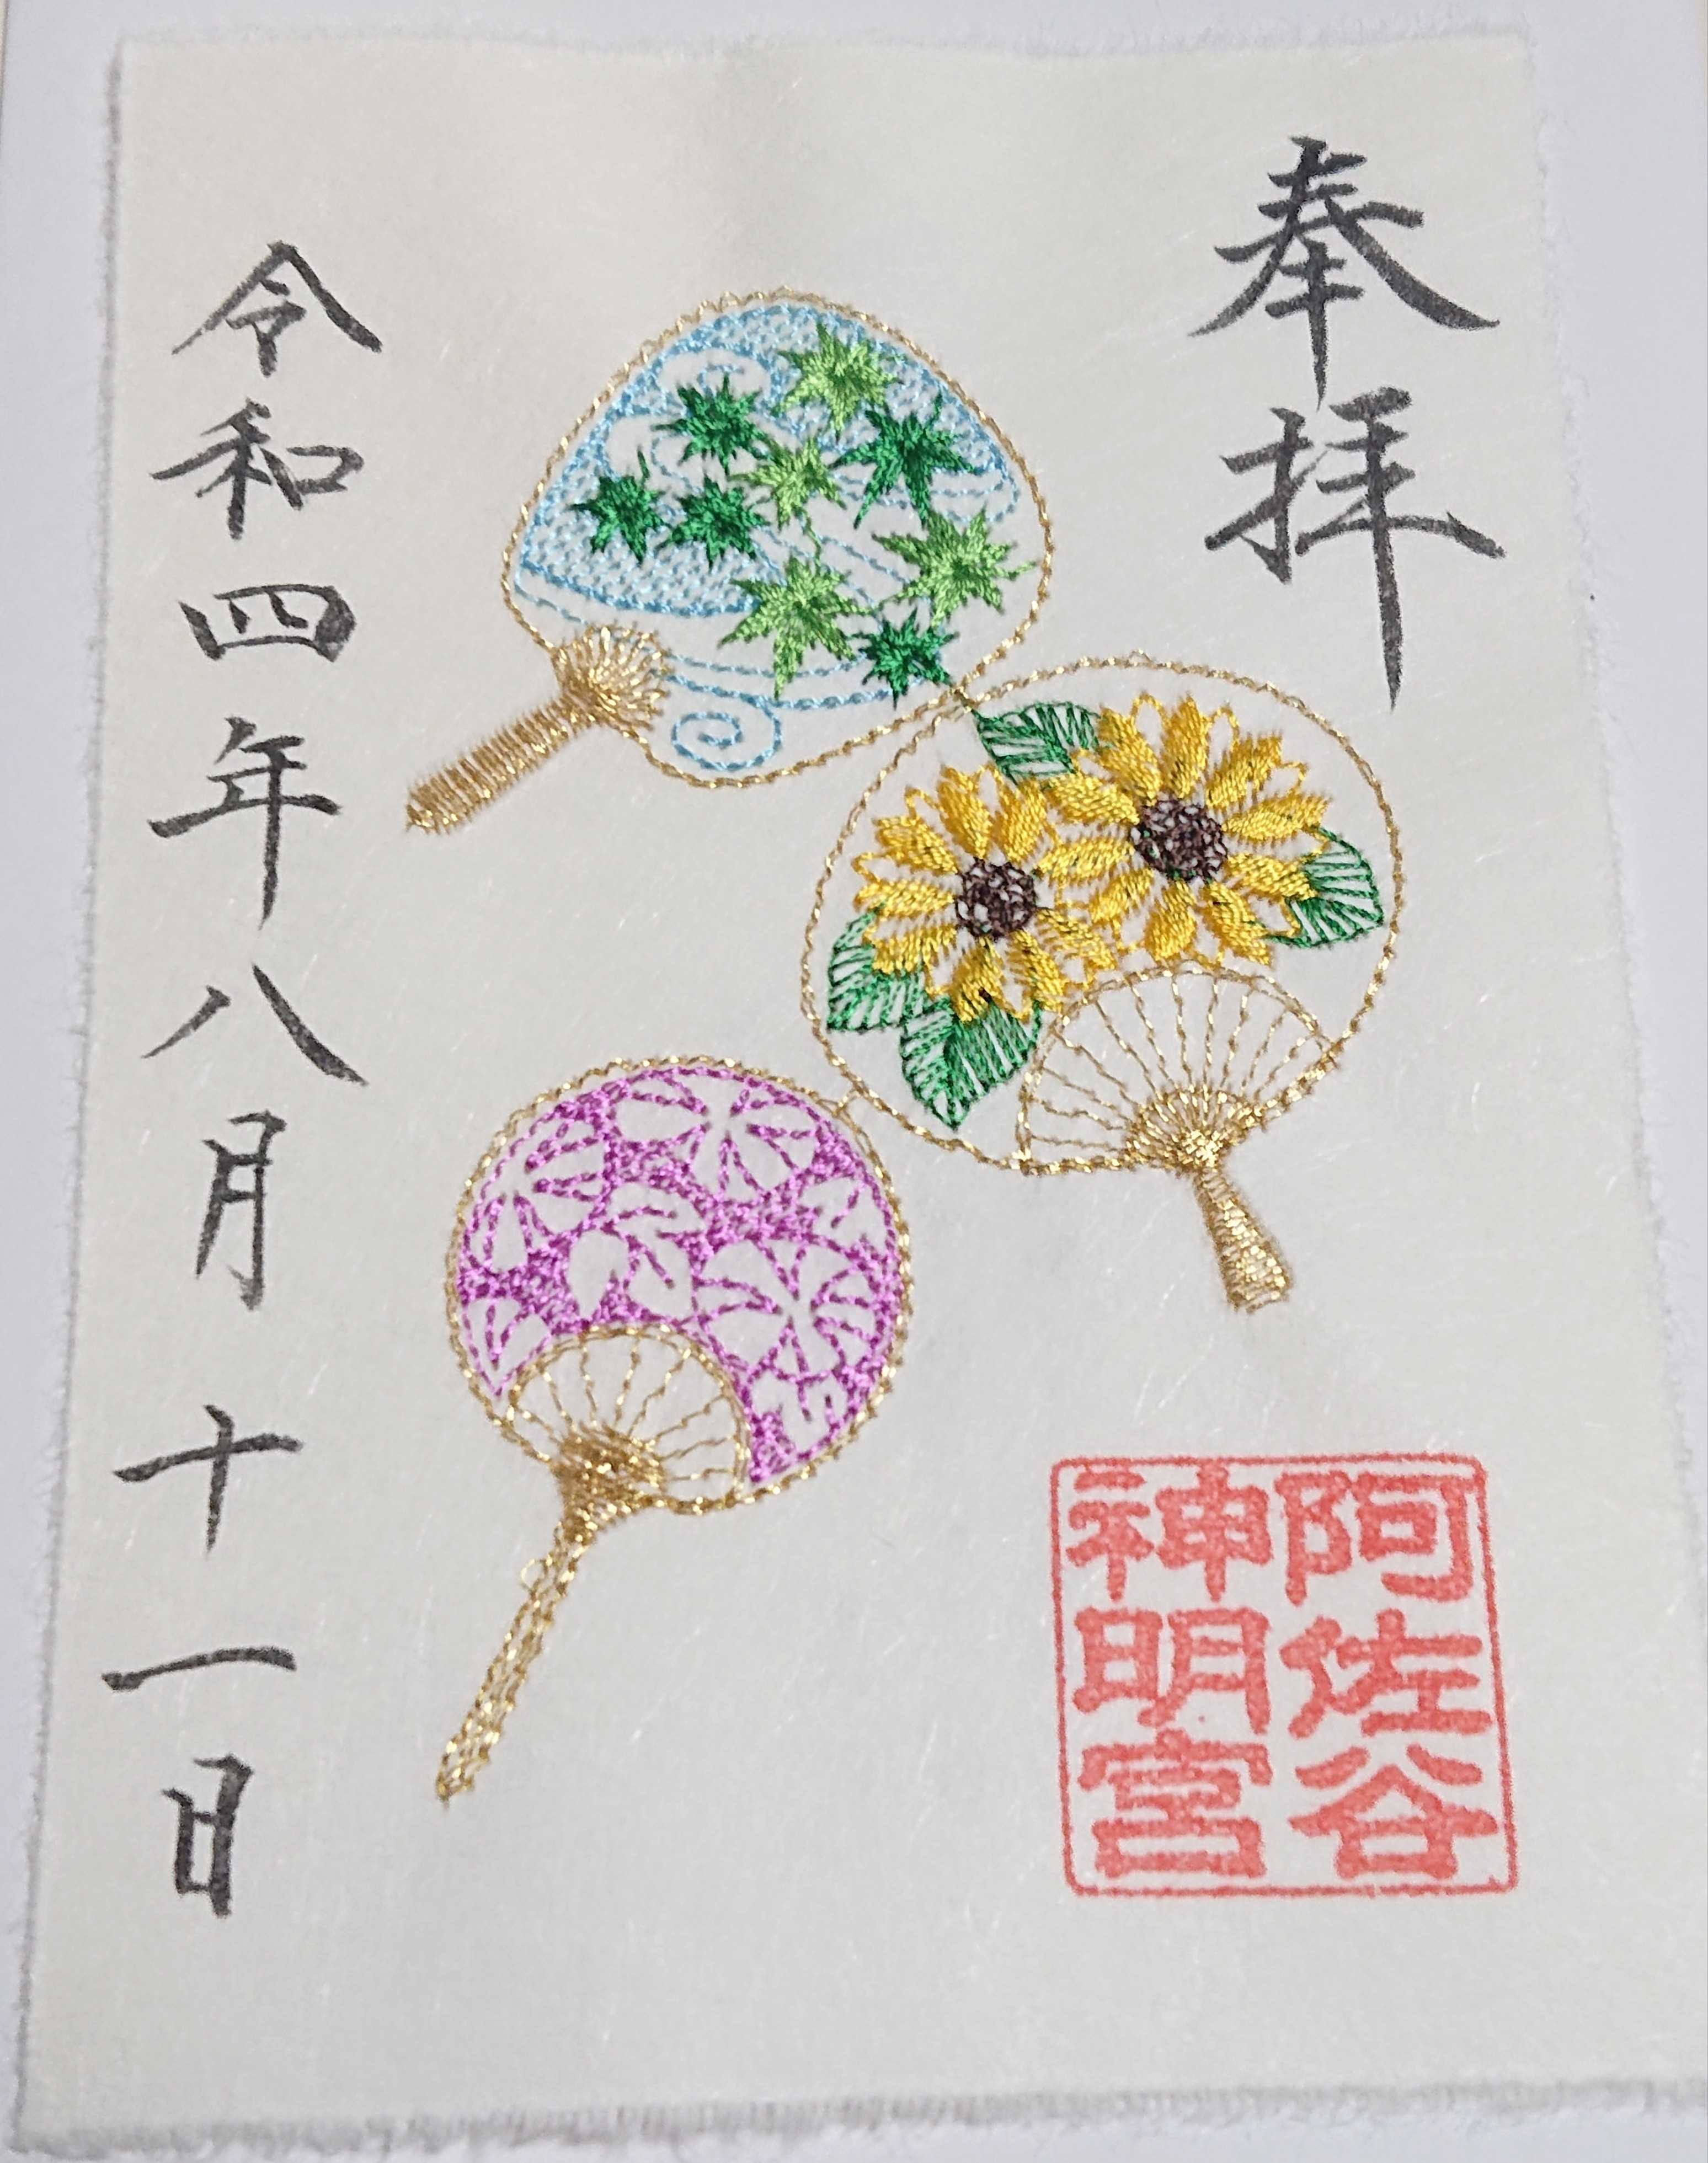 日本全国 送料無料 刺繍入り御朱印符 阿佐ヶ谷神明宮 令和4年3月